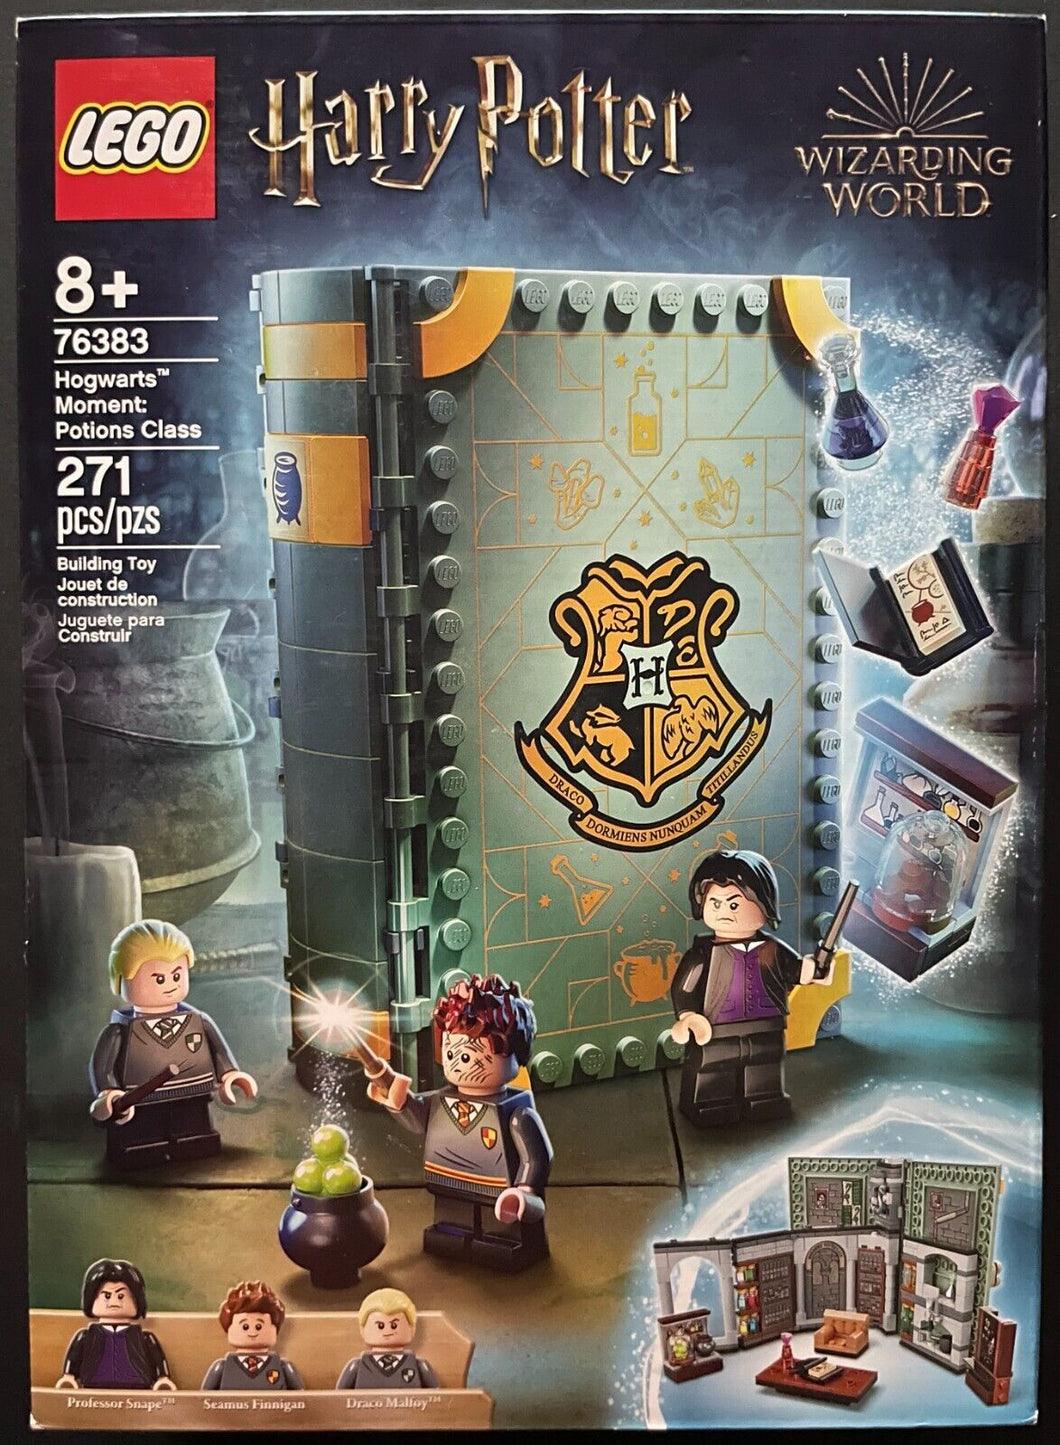 2022 Harry Potter Lego Set 76383 Hogwarts Moment: Potions Class NIB